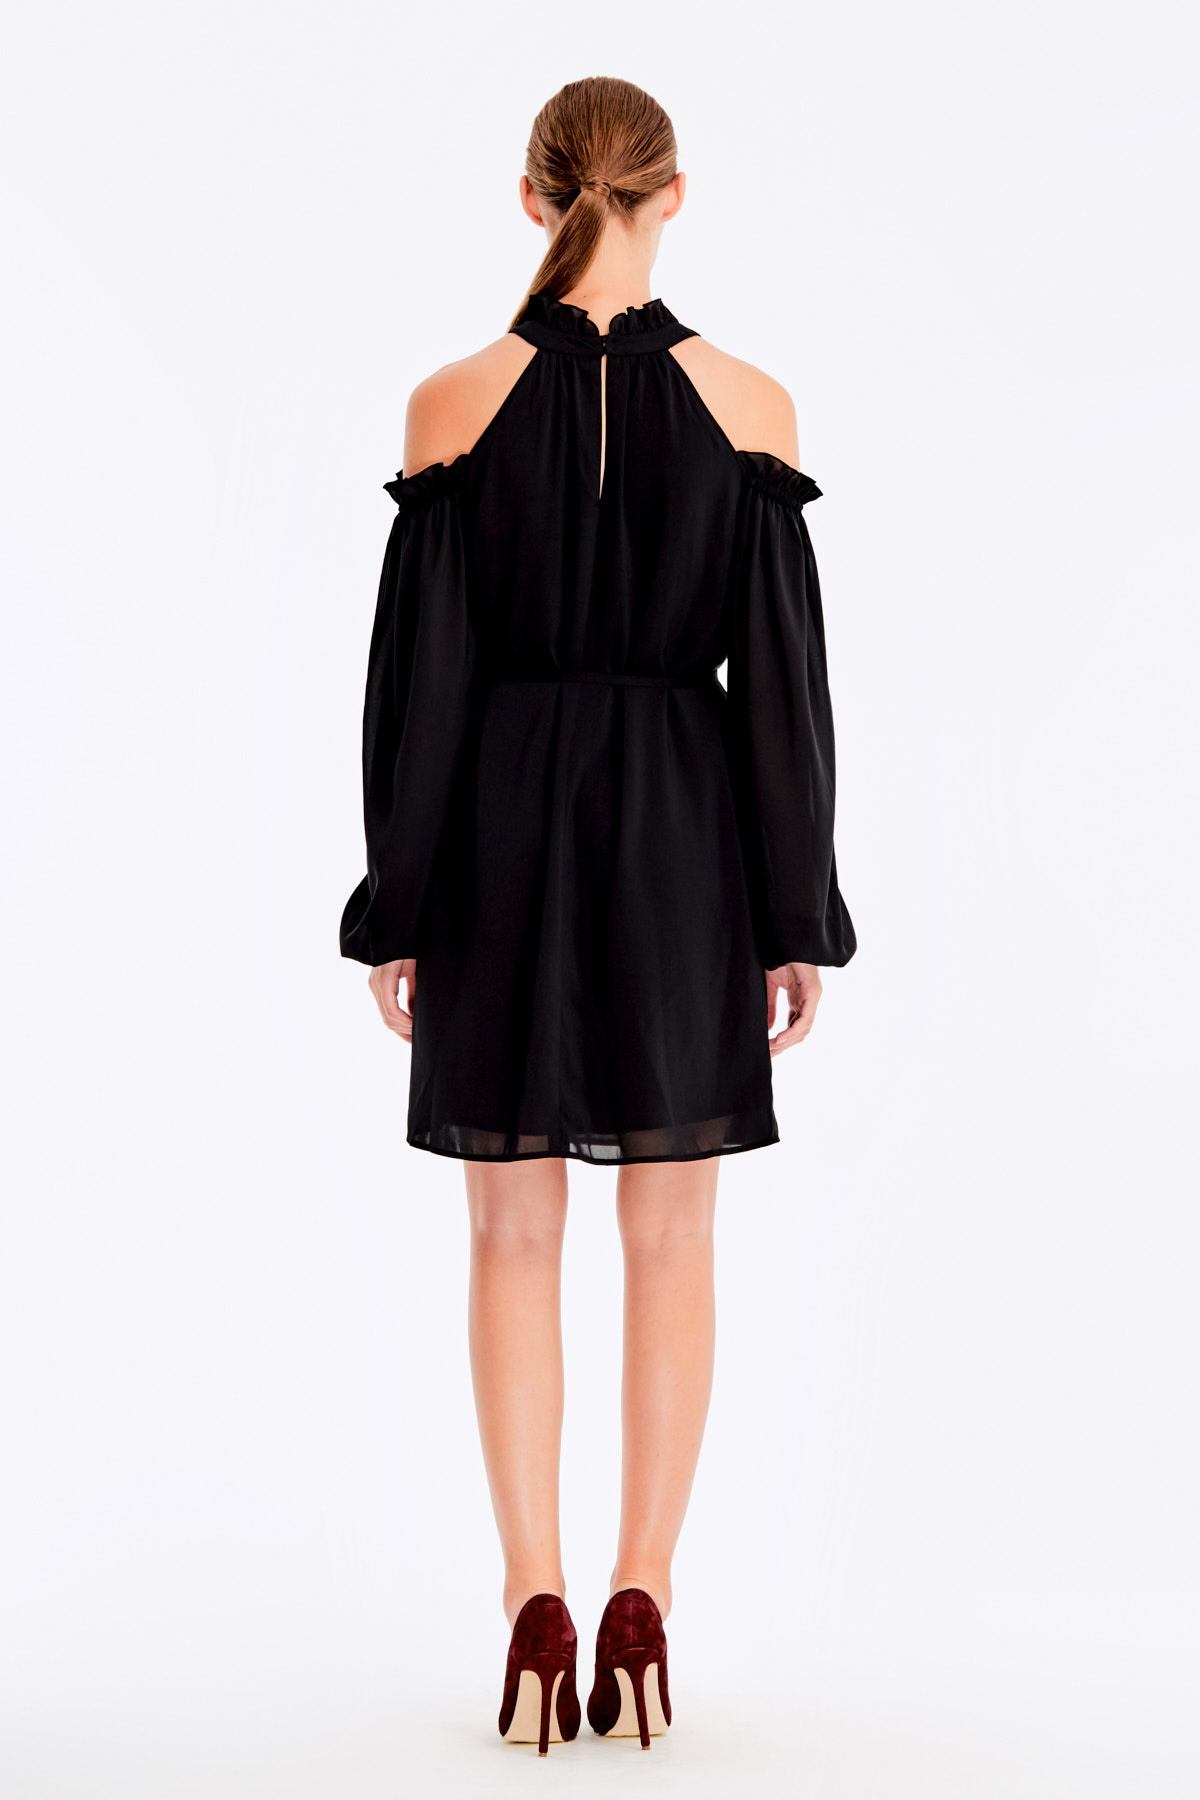 Open shoulder black chiffon dress, photo 7